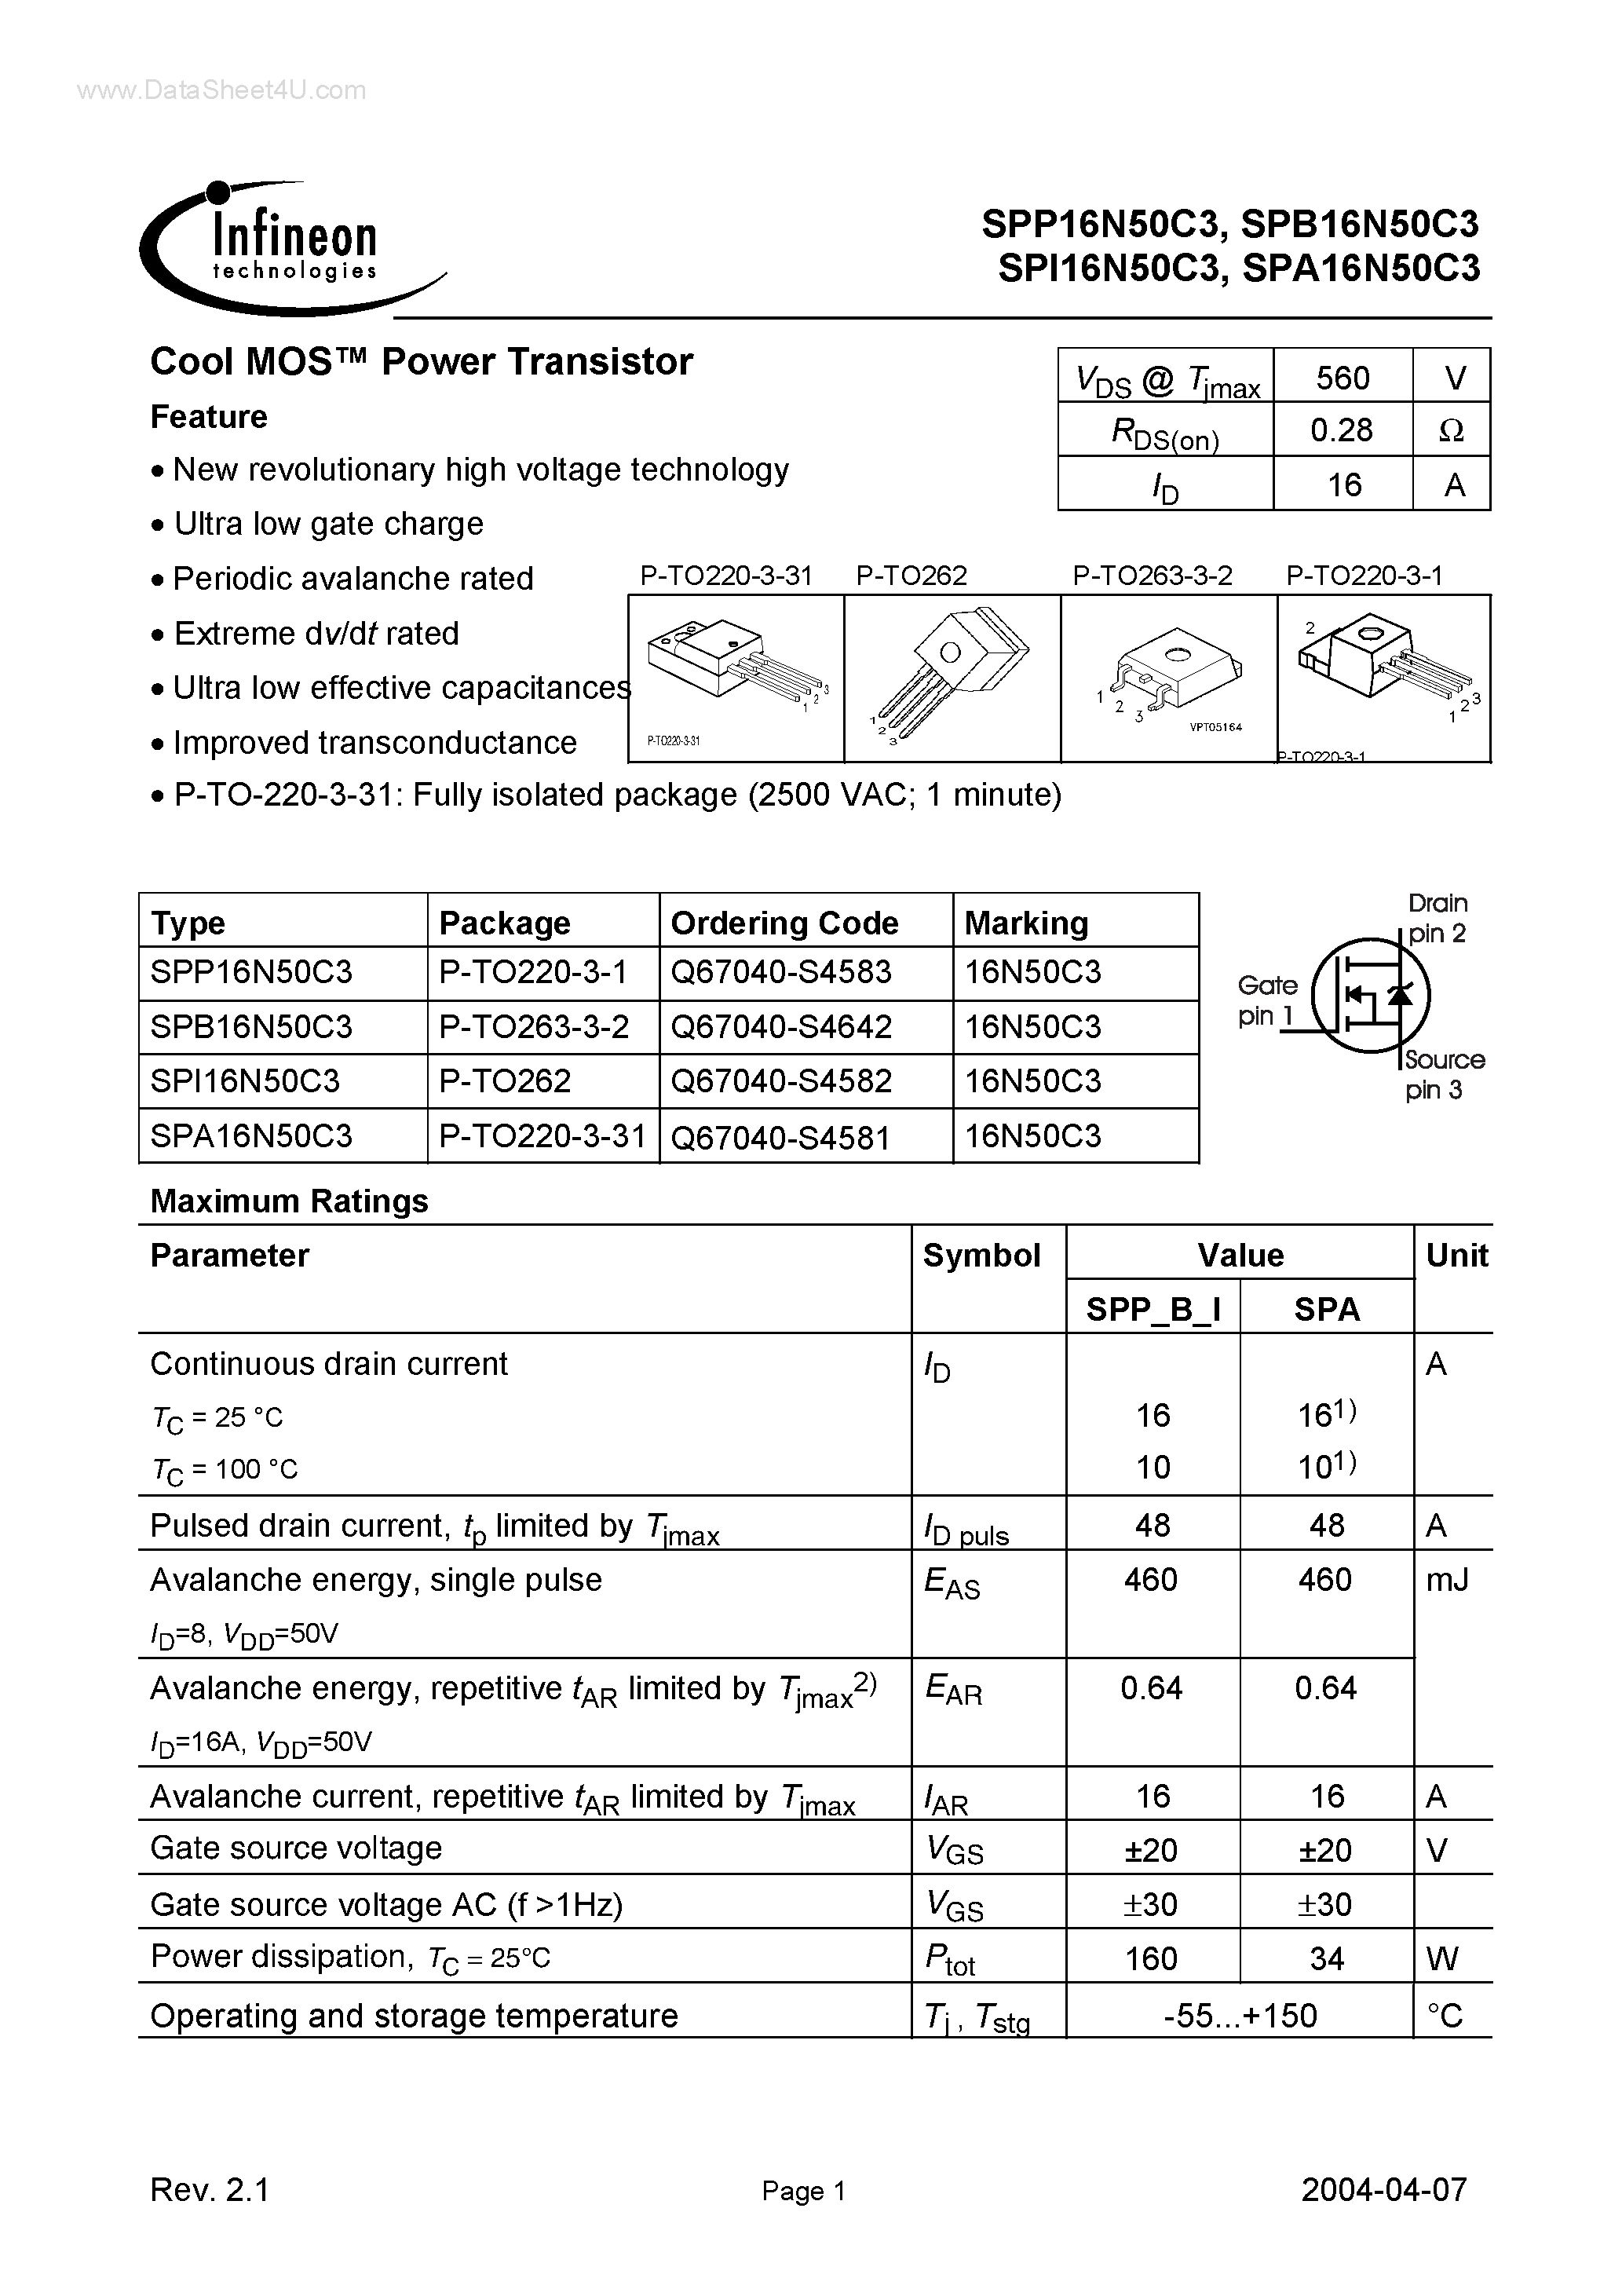 Datasheet SPI16N50C3 - Power Transistor page 1